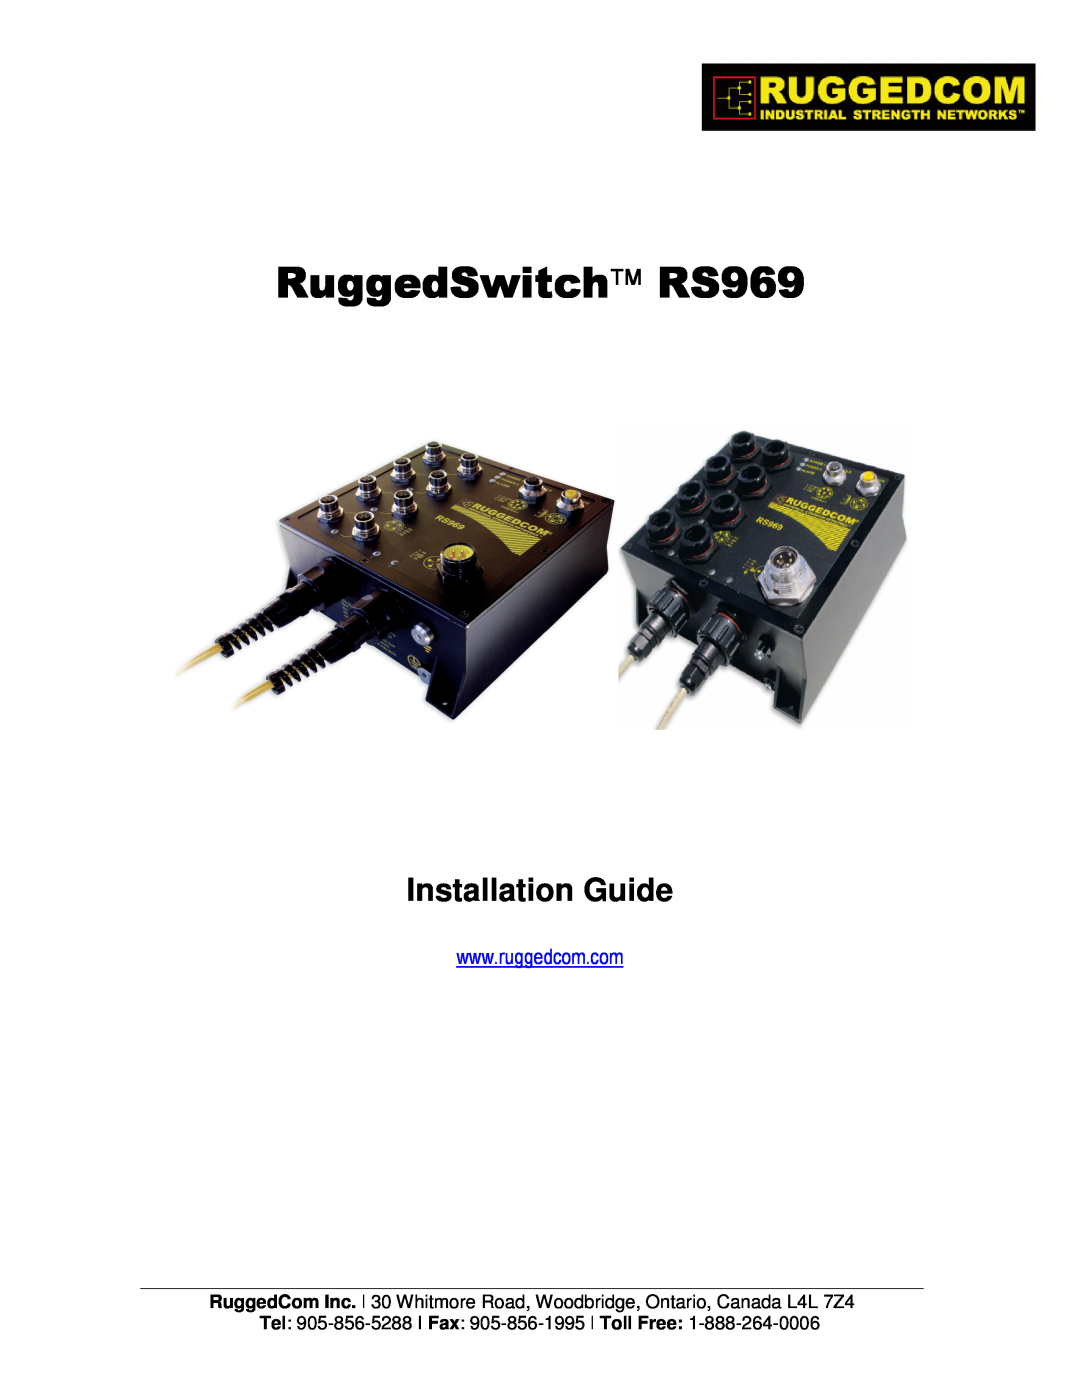 RuggedCom manual RuggedSwitch RS969, Installation Guide 